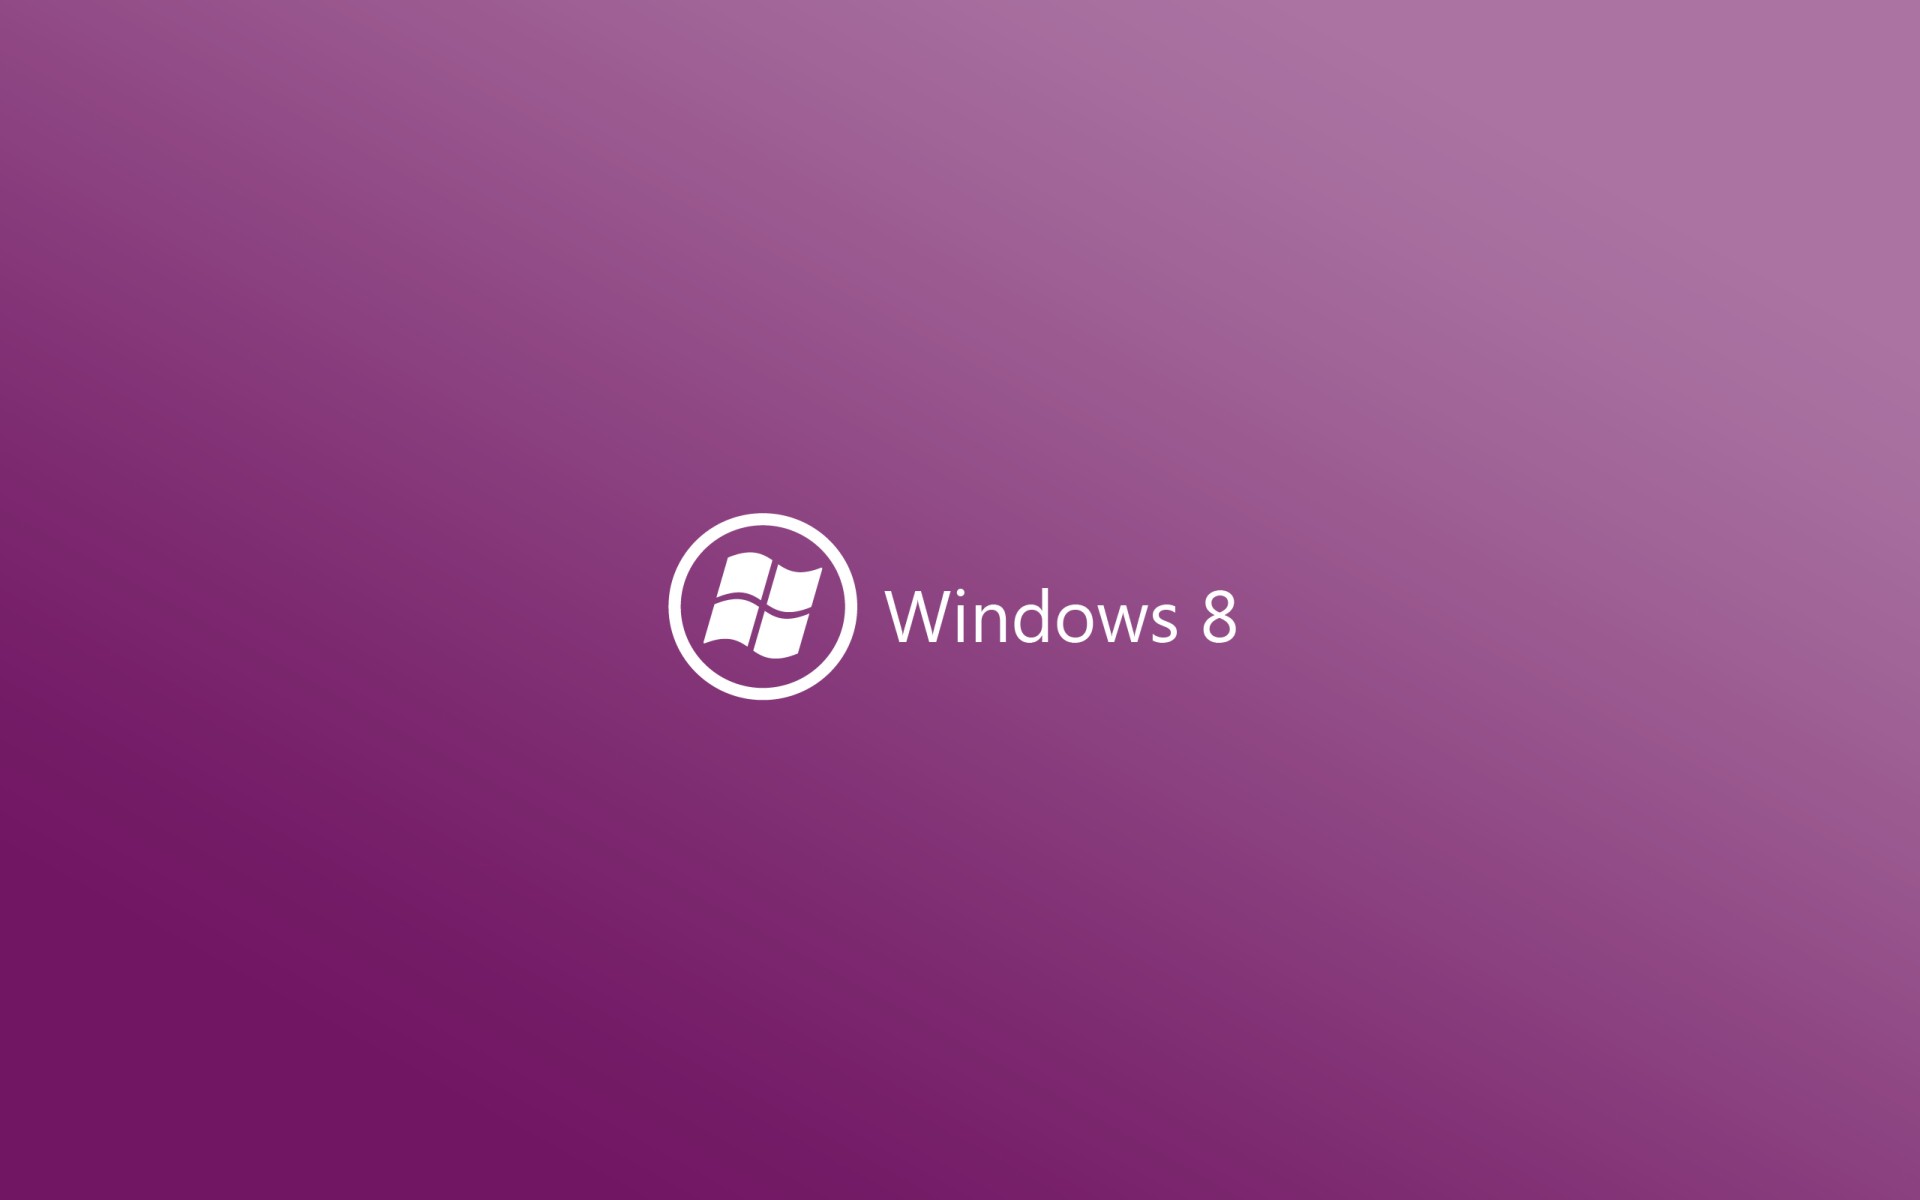 Windows 8 Wallpaper Logo on 10 Colors of Background Zon Saja